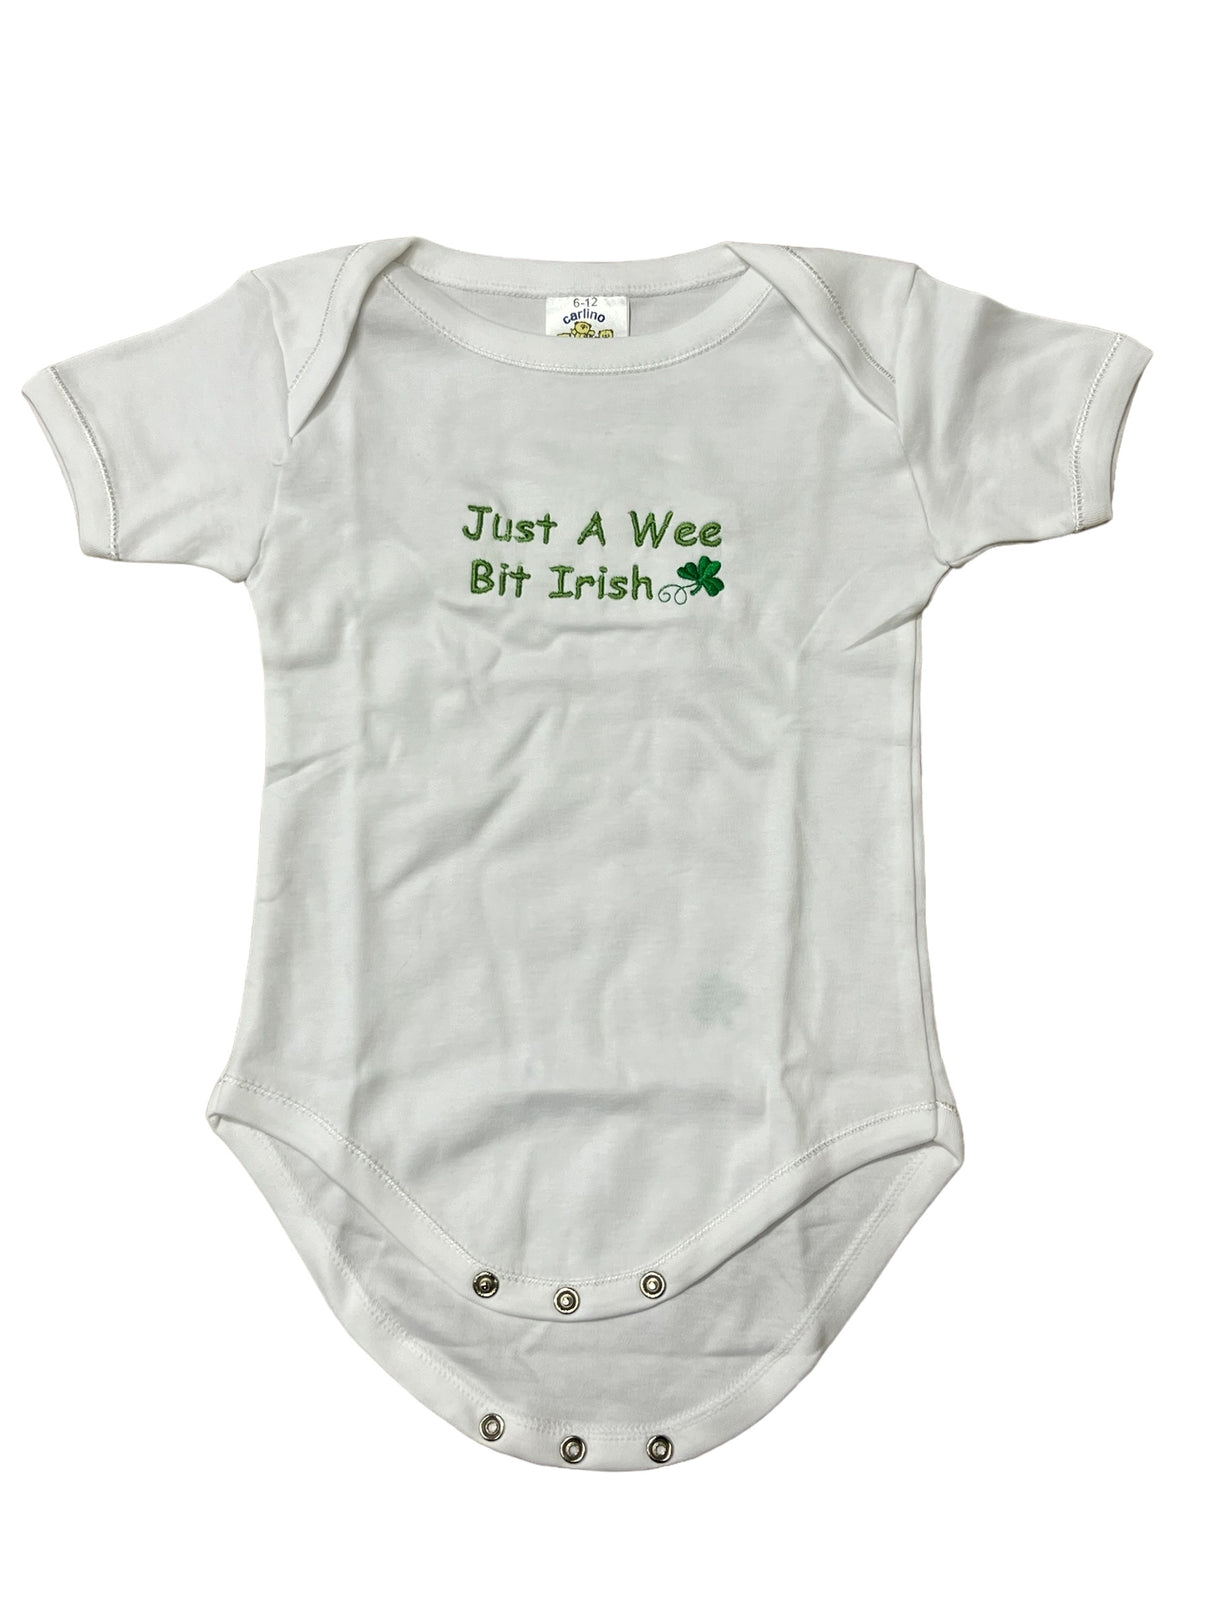 Just A Wee Bit Irish Baby Romper